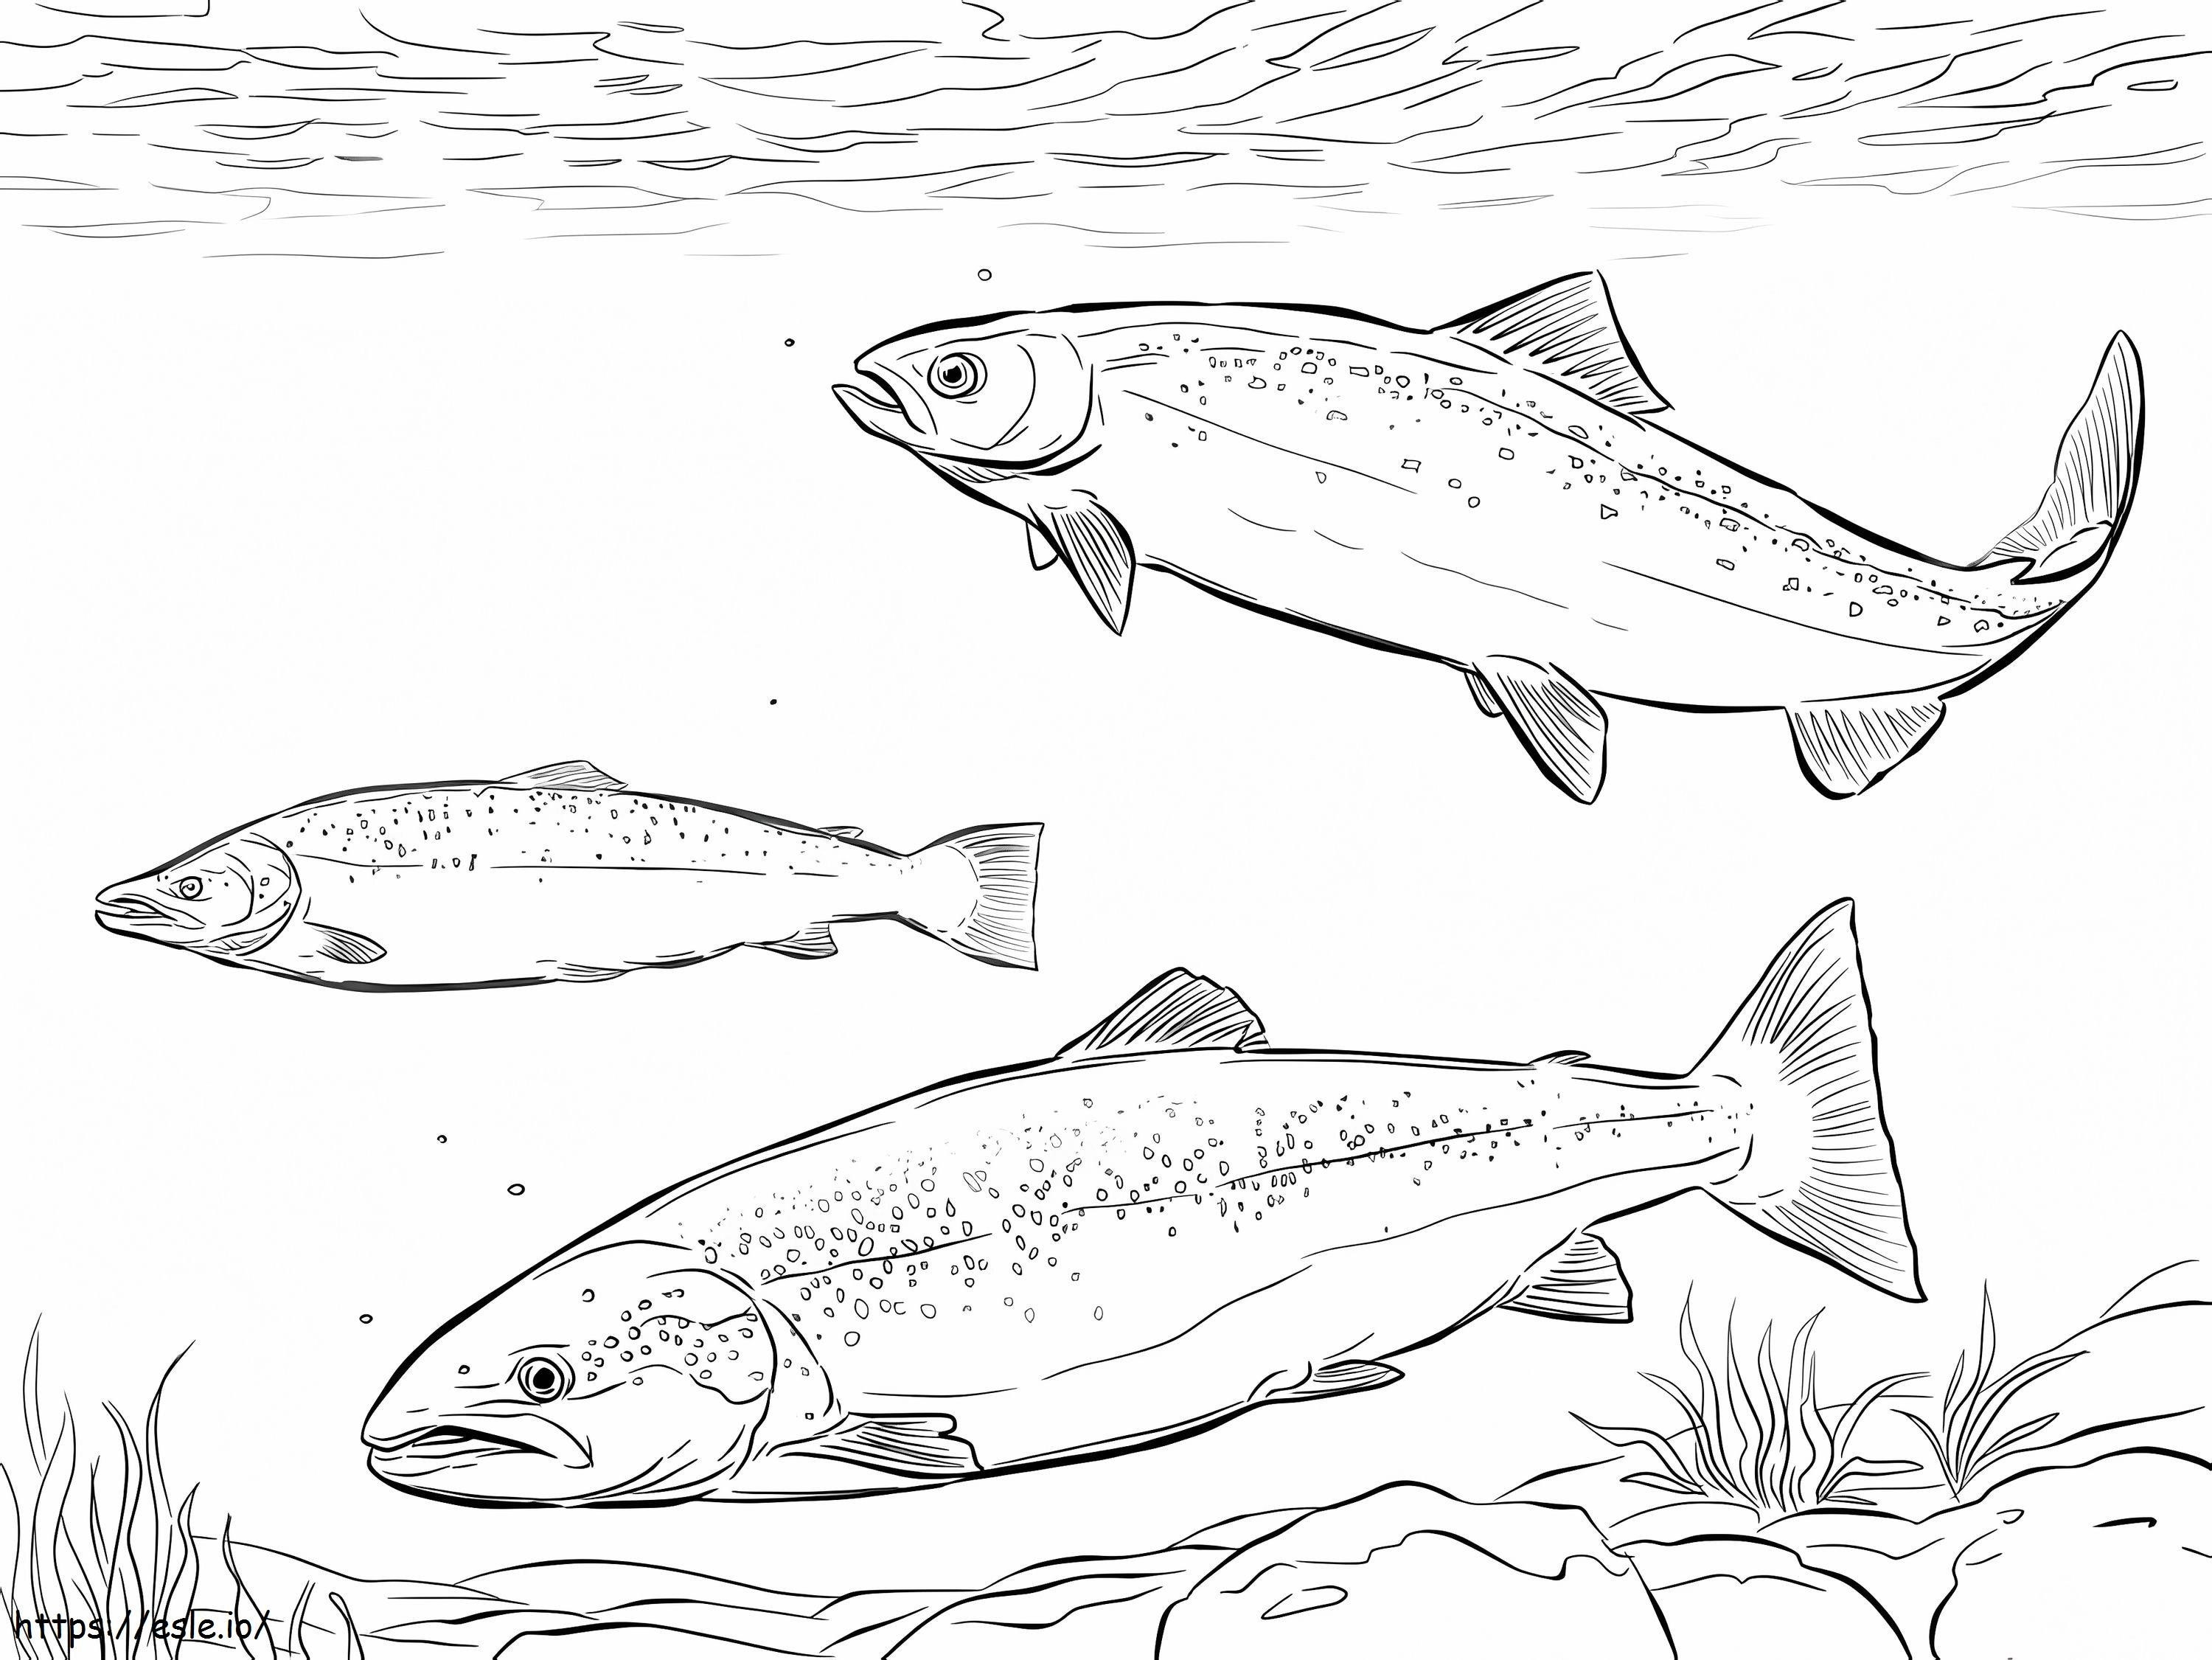 Atlantic Salmon Shoal coloring page